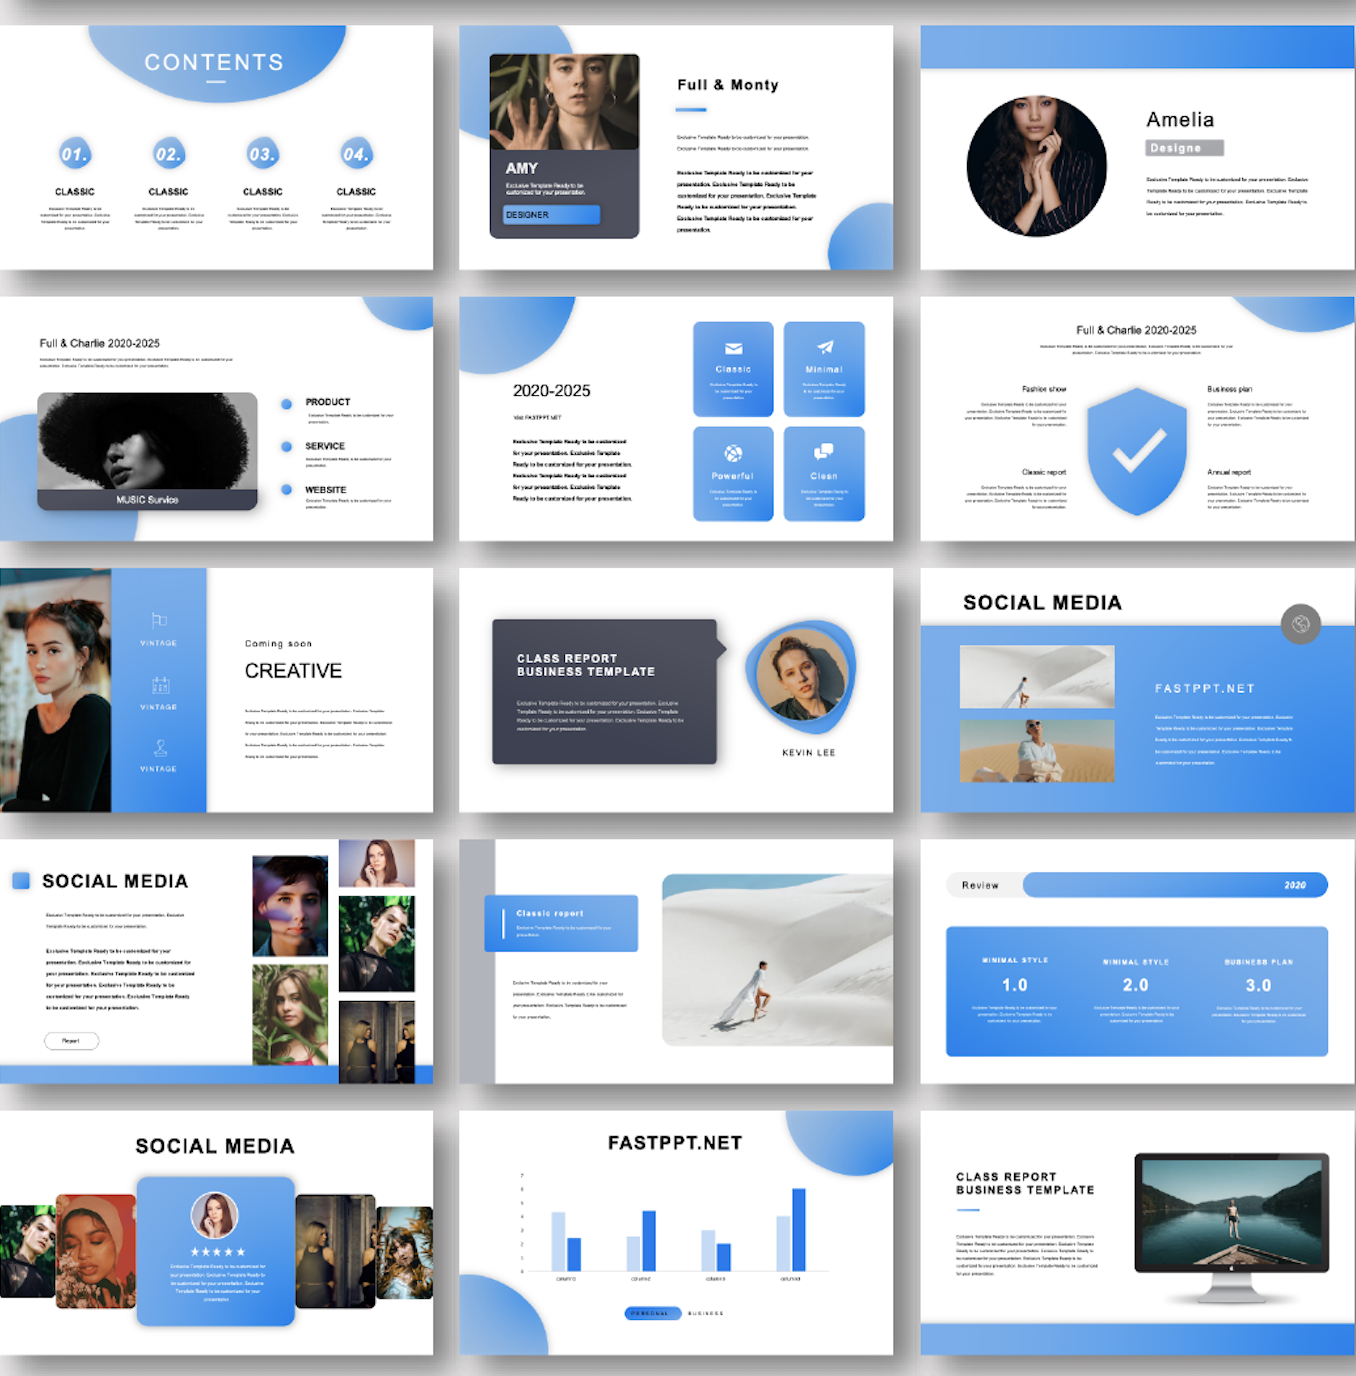 business plan presentation template